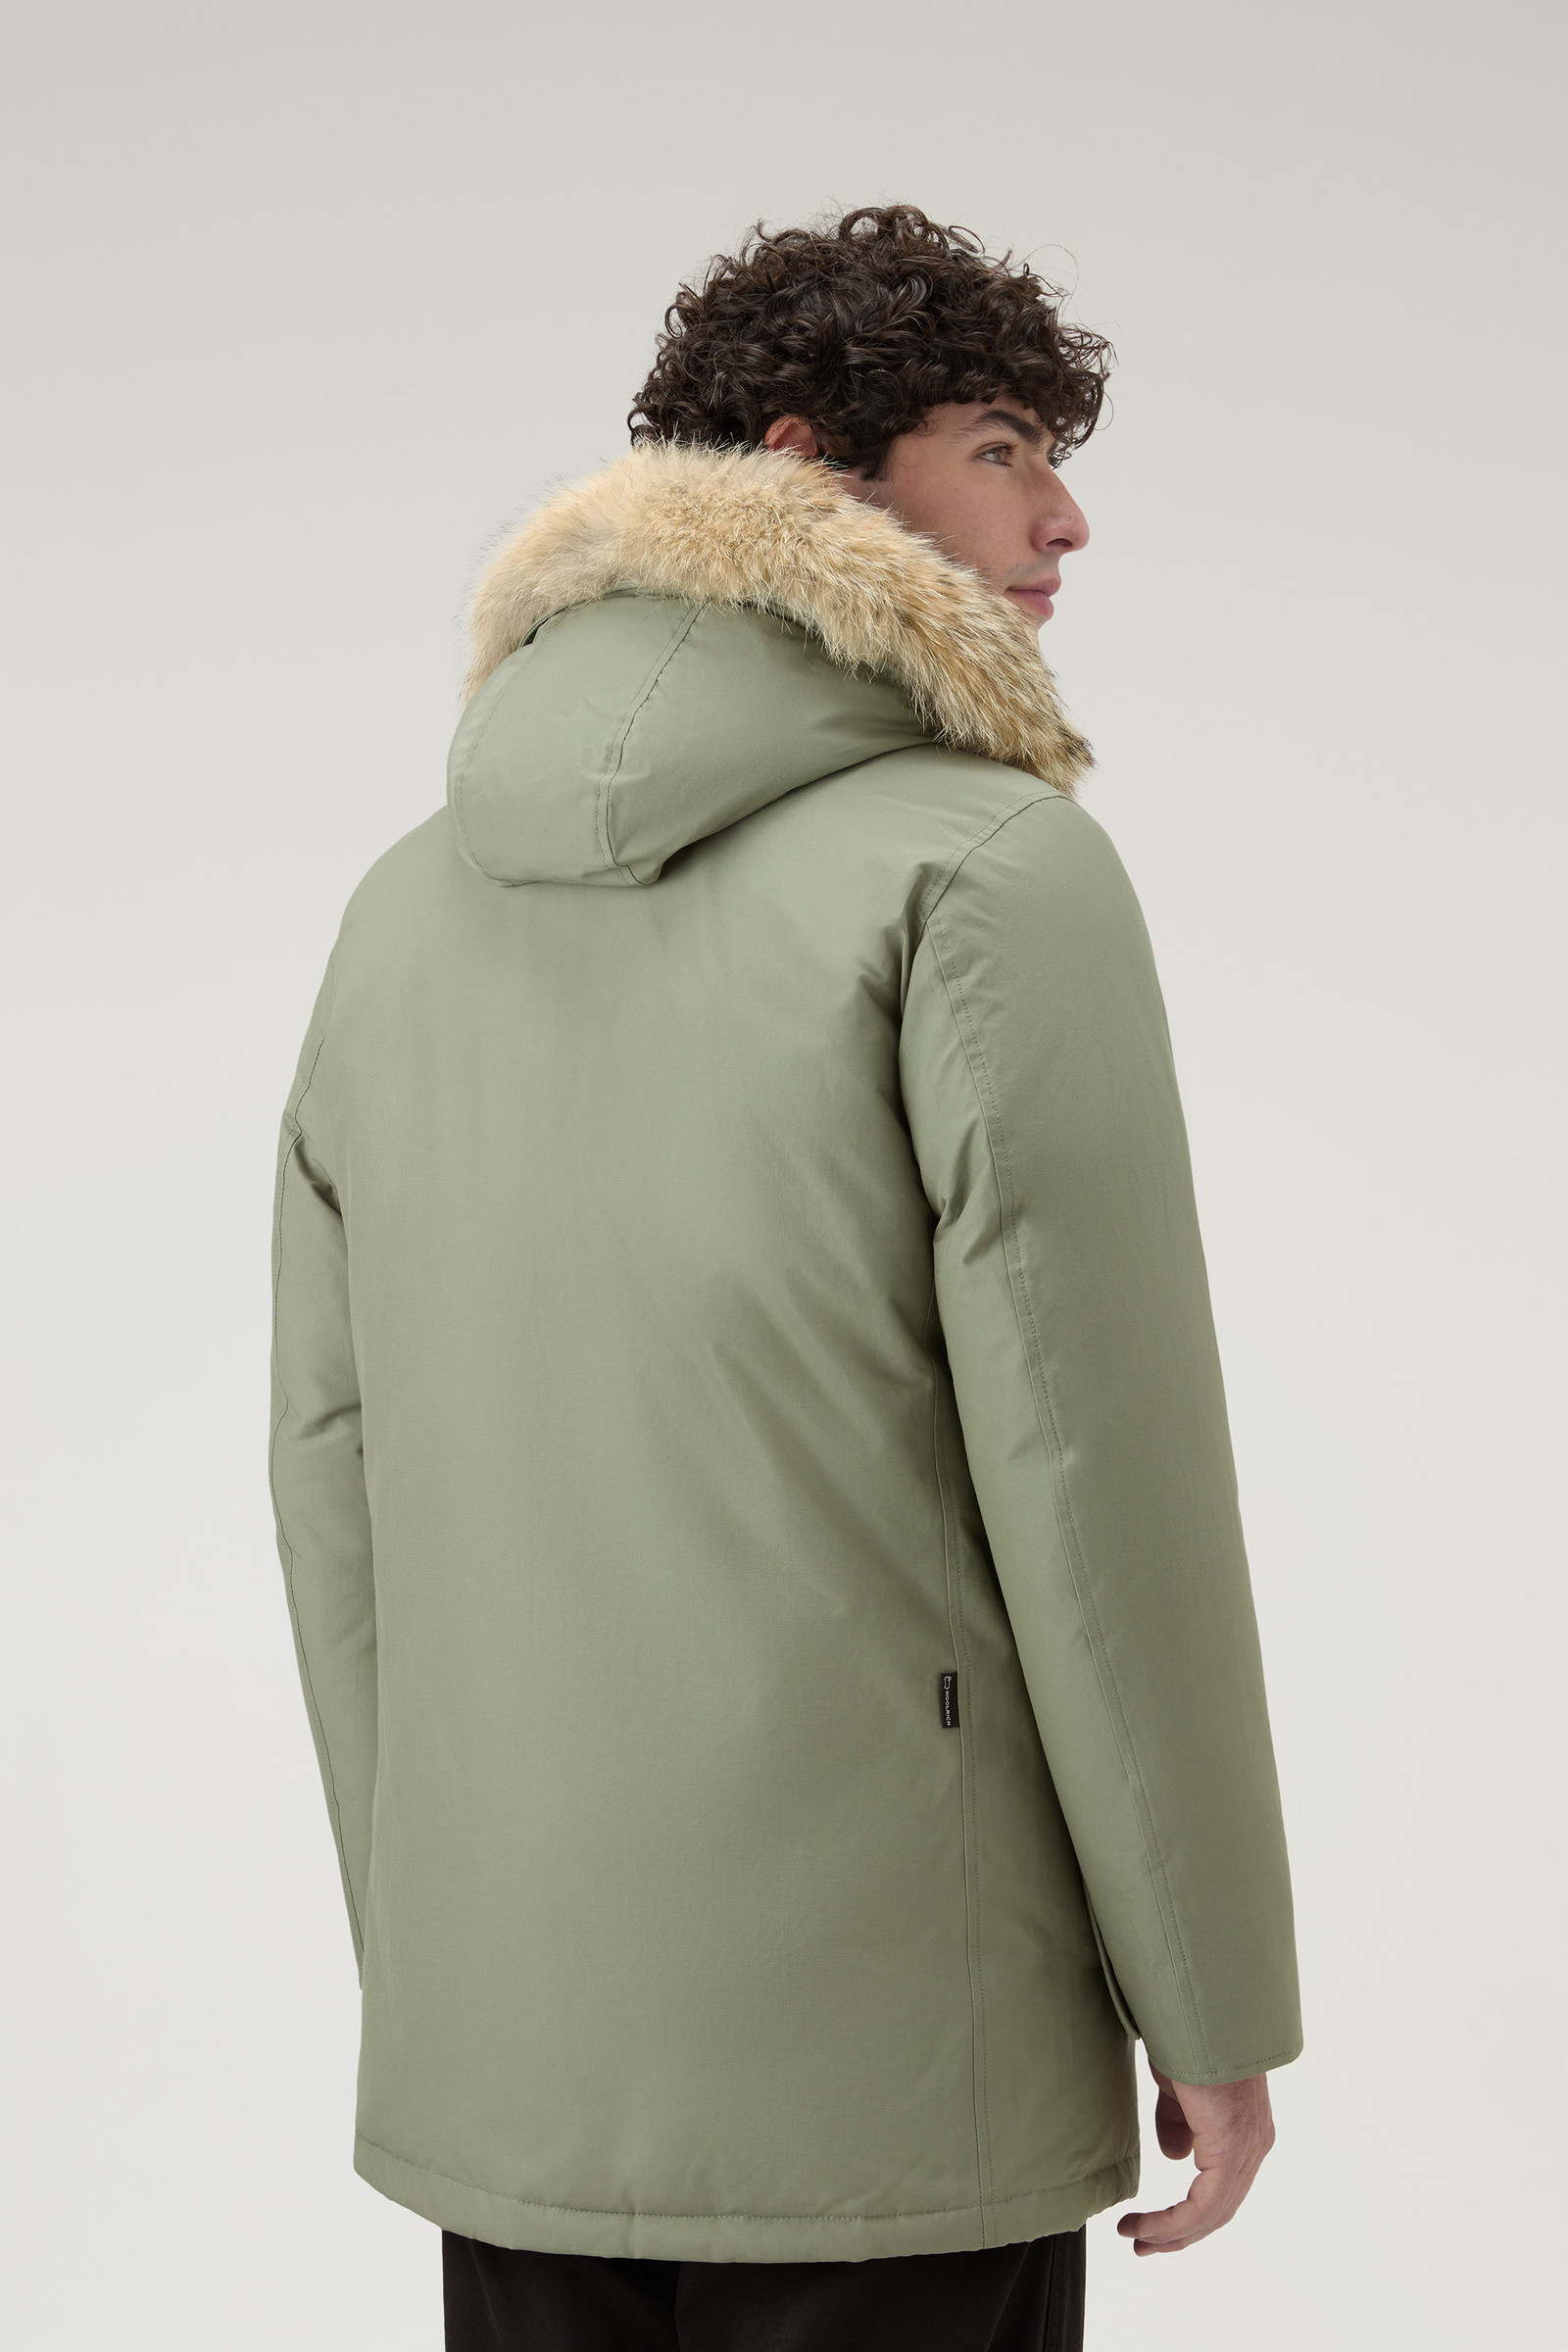 Woolrich Men's Arctic Parka in Ramar Cloth with Detachable Fur Trim Color Green Size L